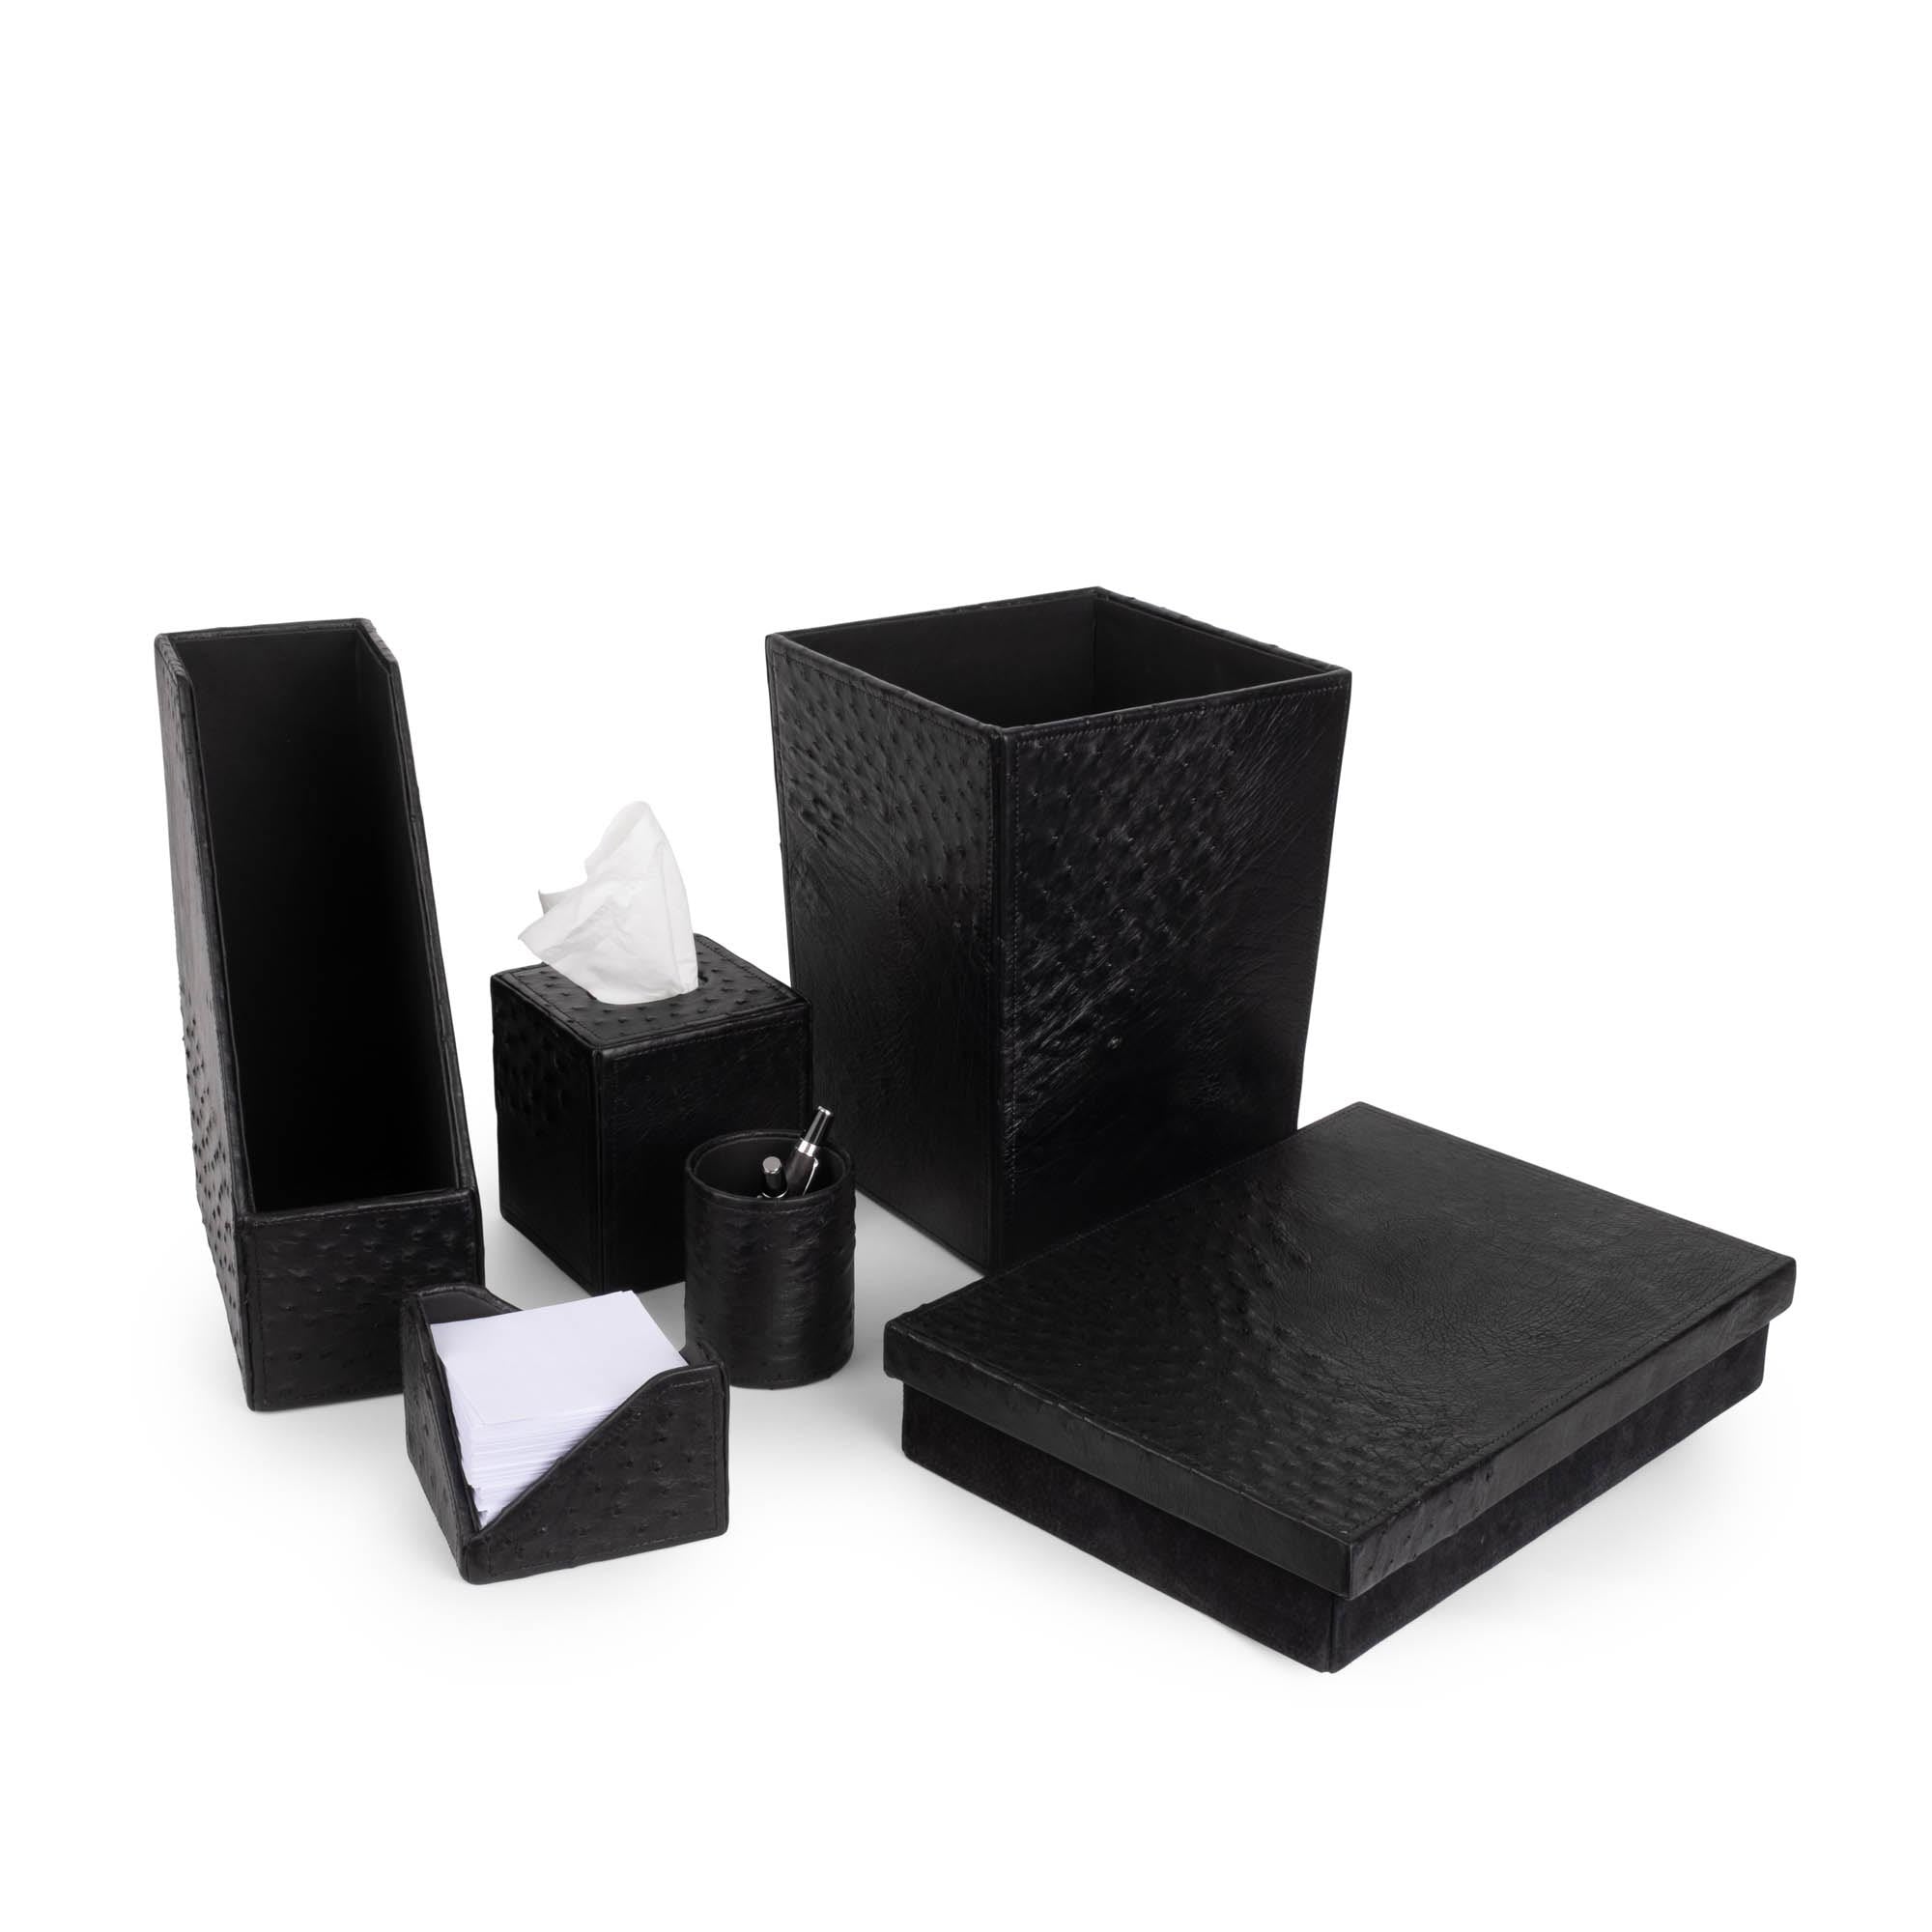 Desk Organizer Box - Ostrich Leather/Suede - Black